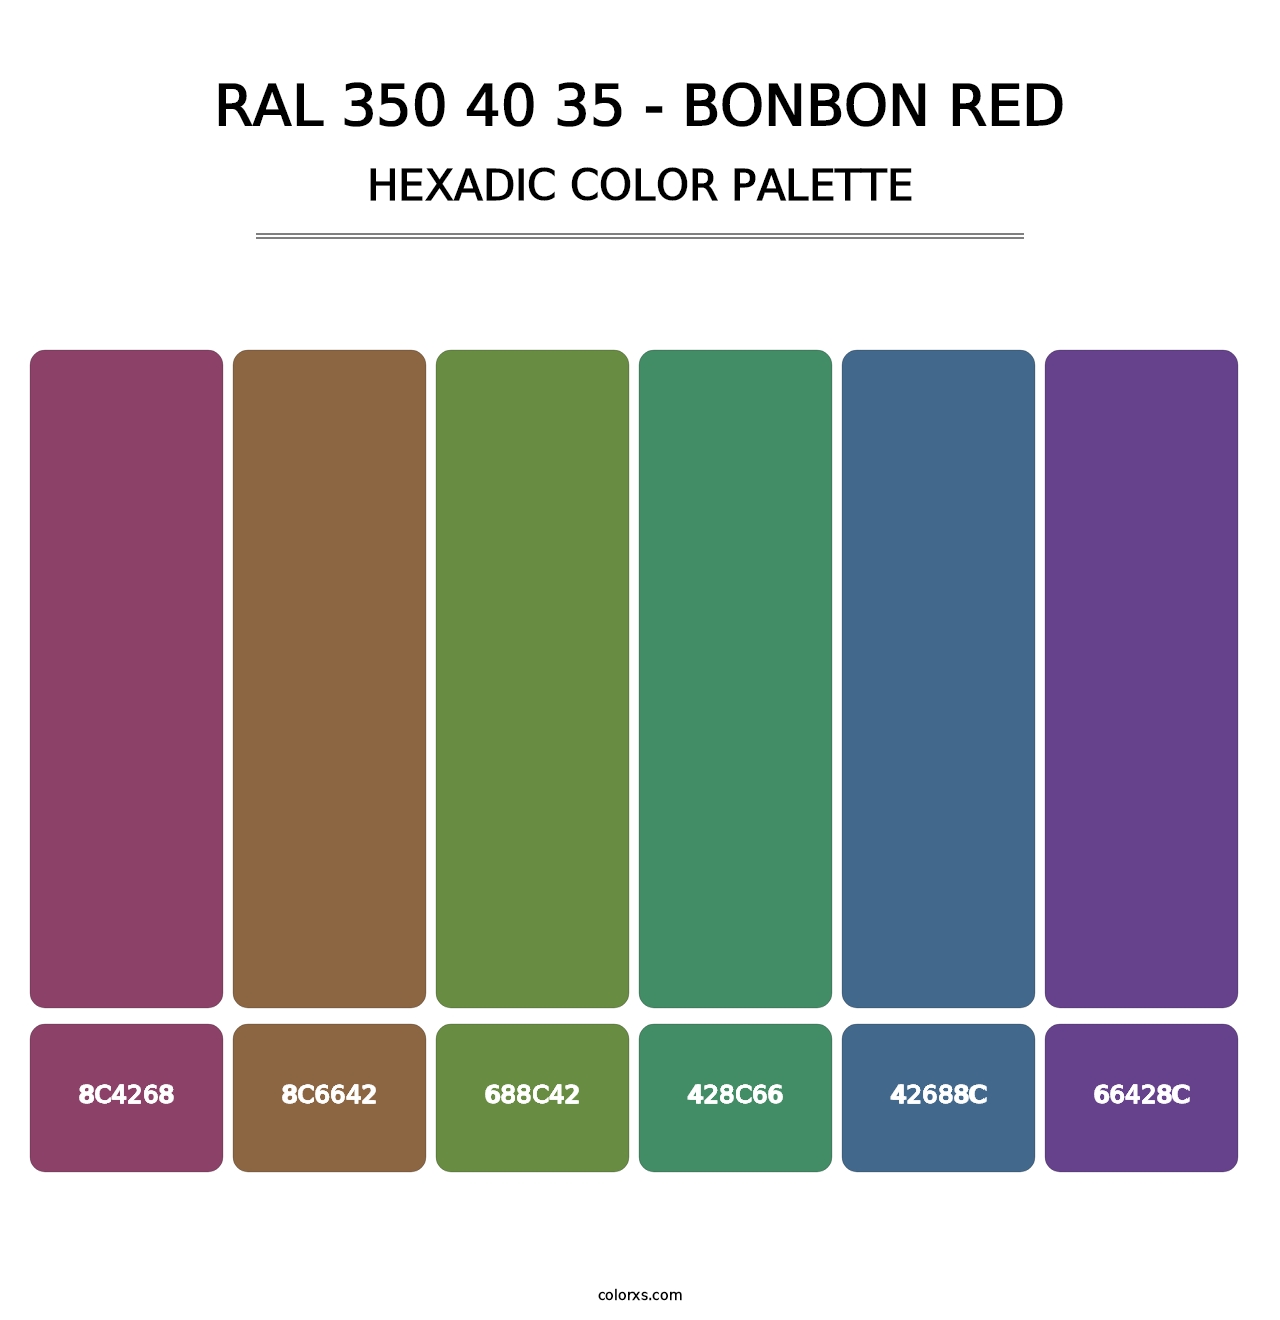 RAL 350 40 35 - Bonbon Red - Hexadic Color Palette